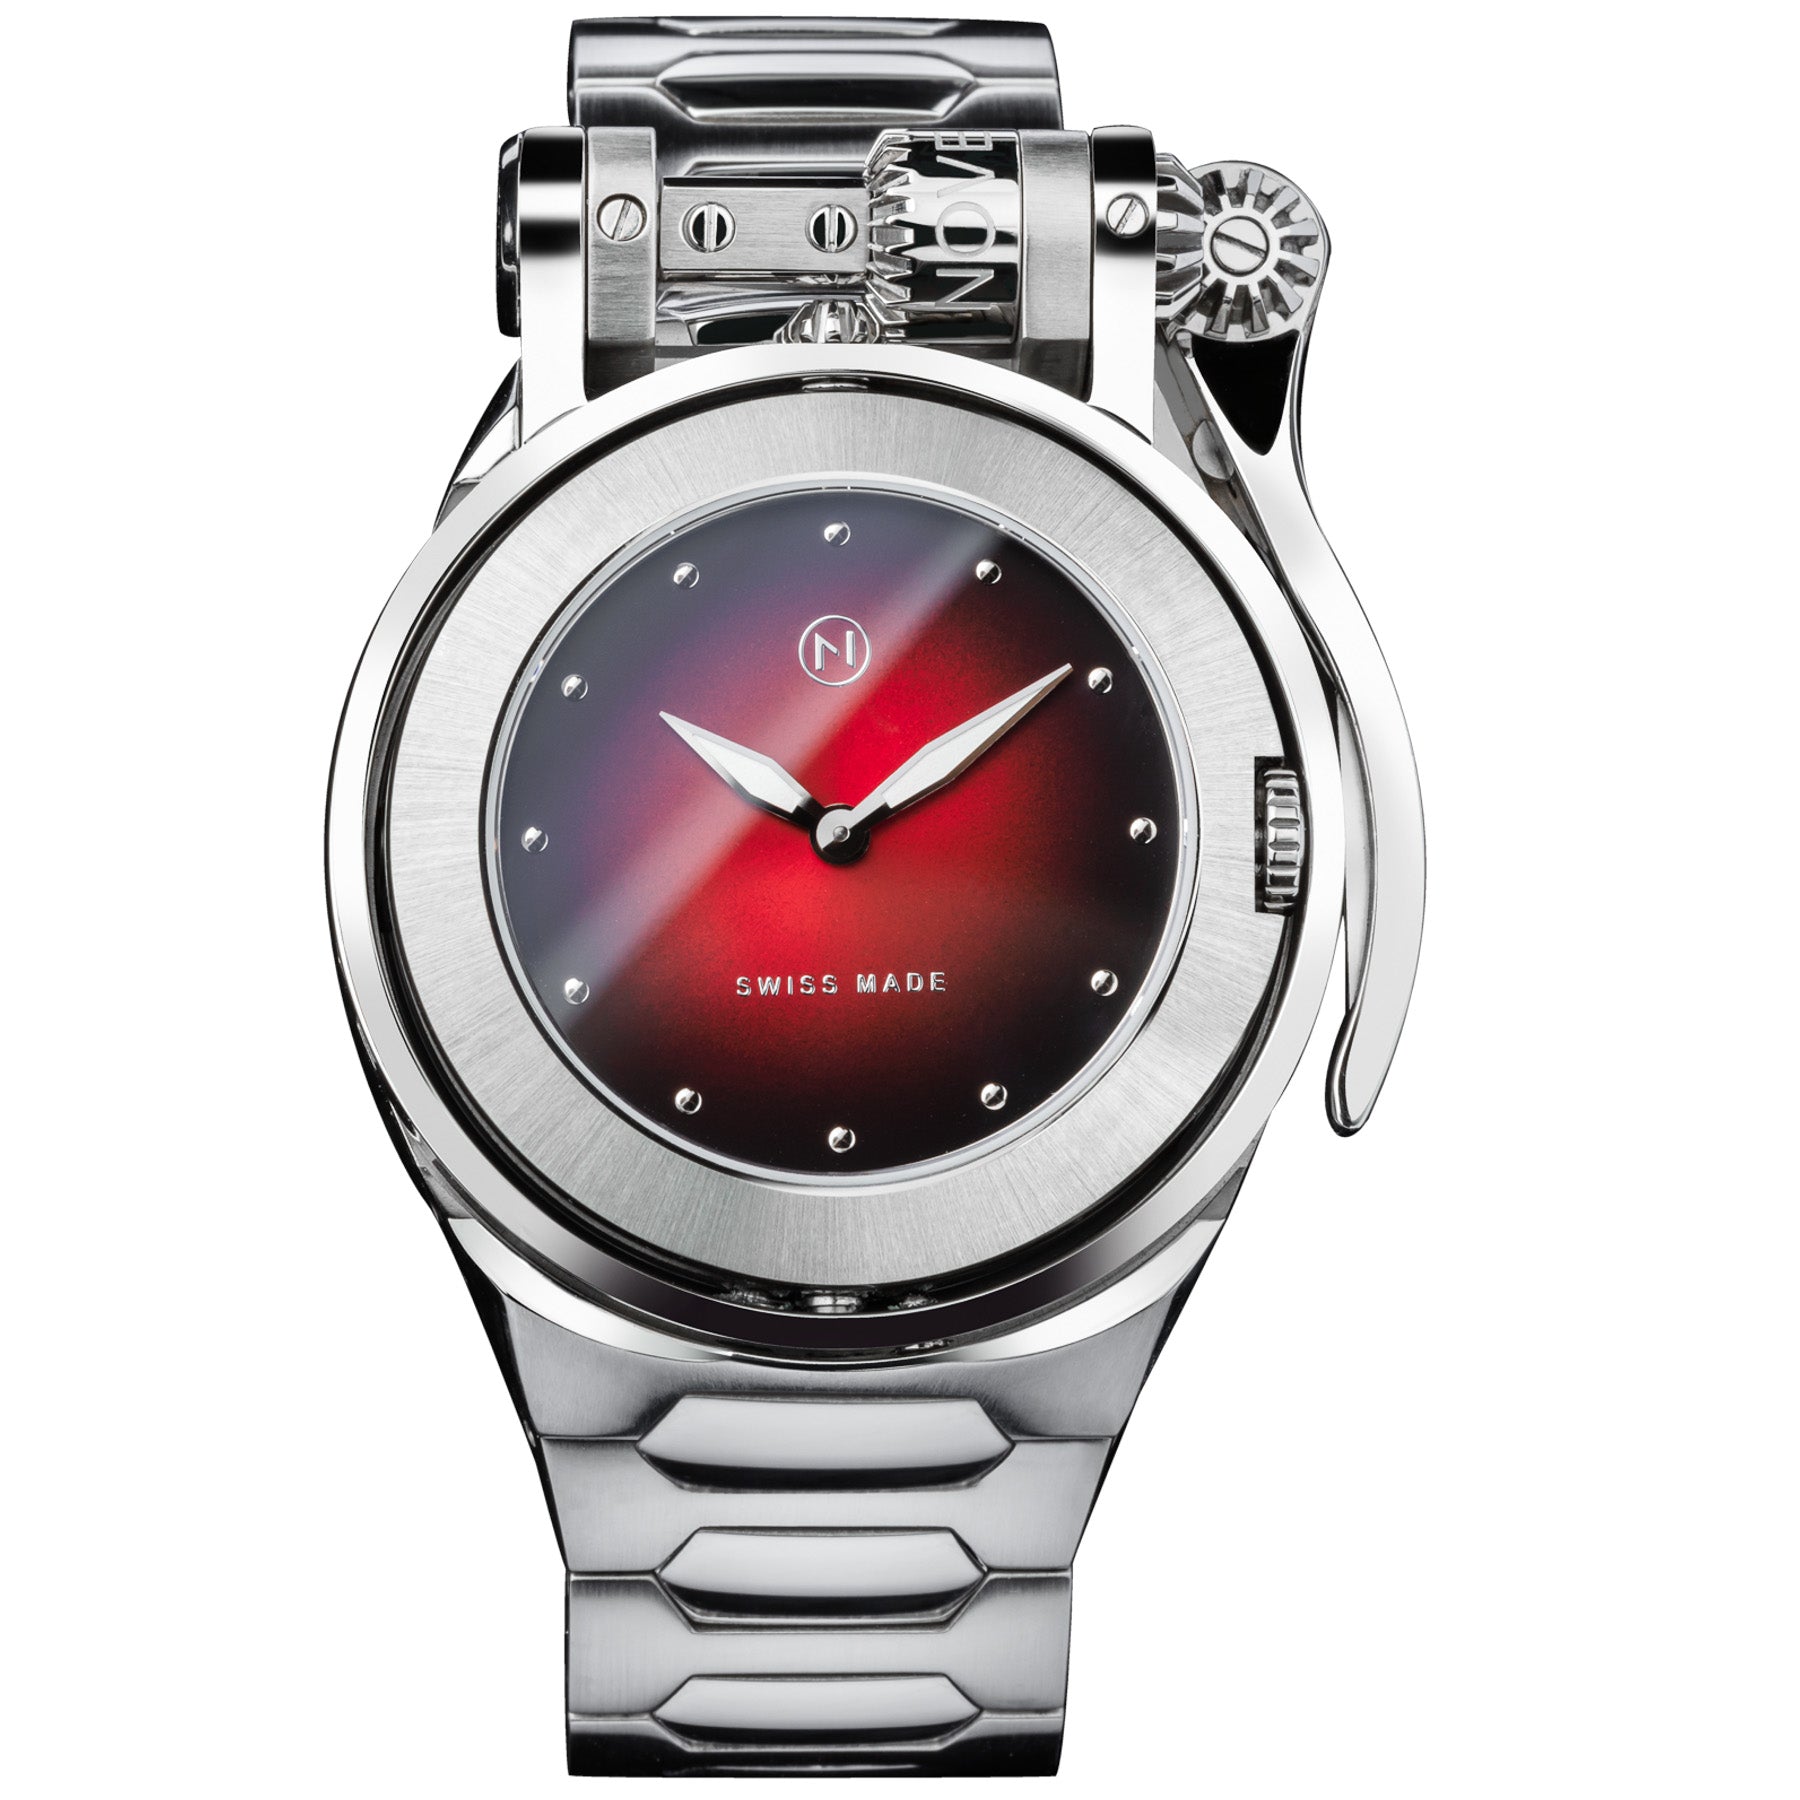 Buy Gemini Men's Watch 1698BM01 at Amazon.in